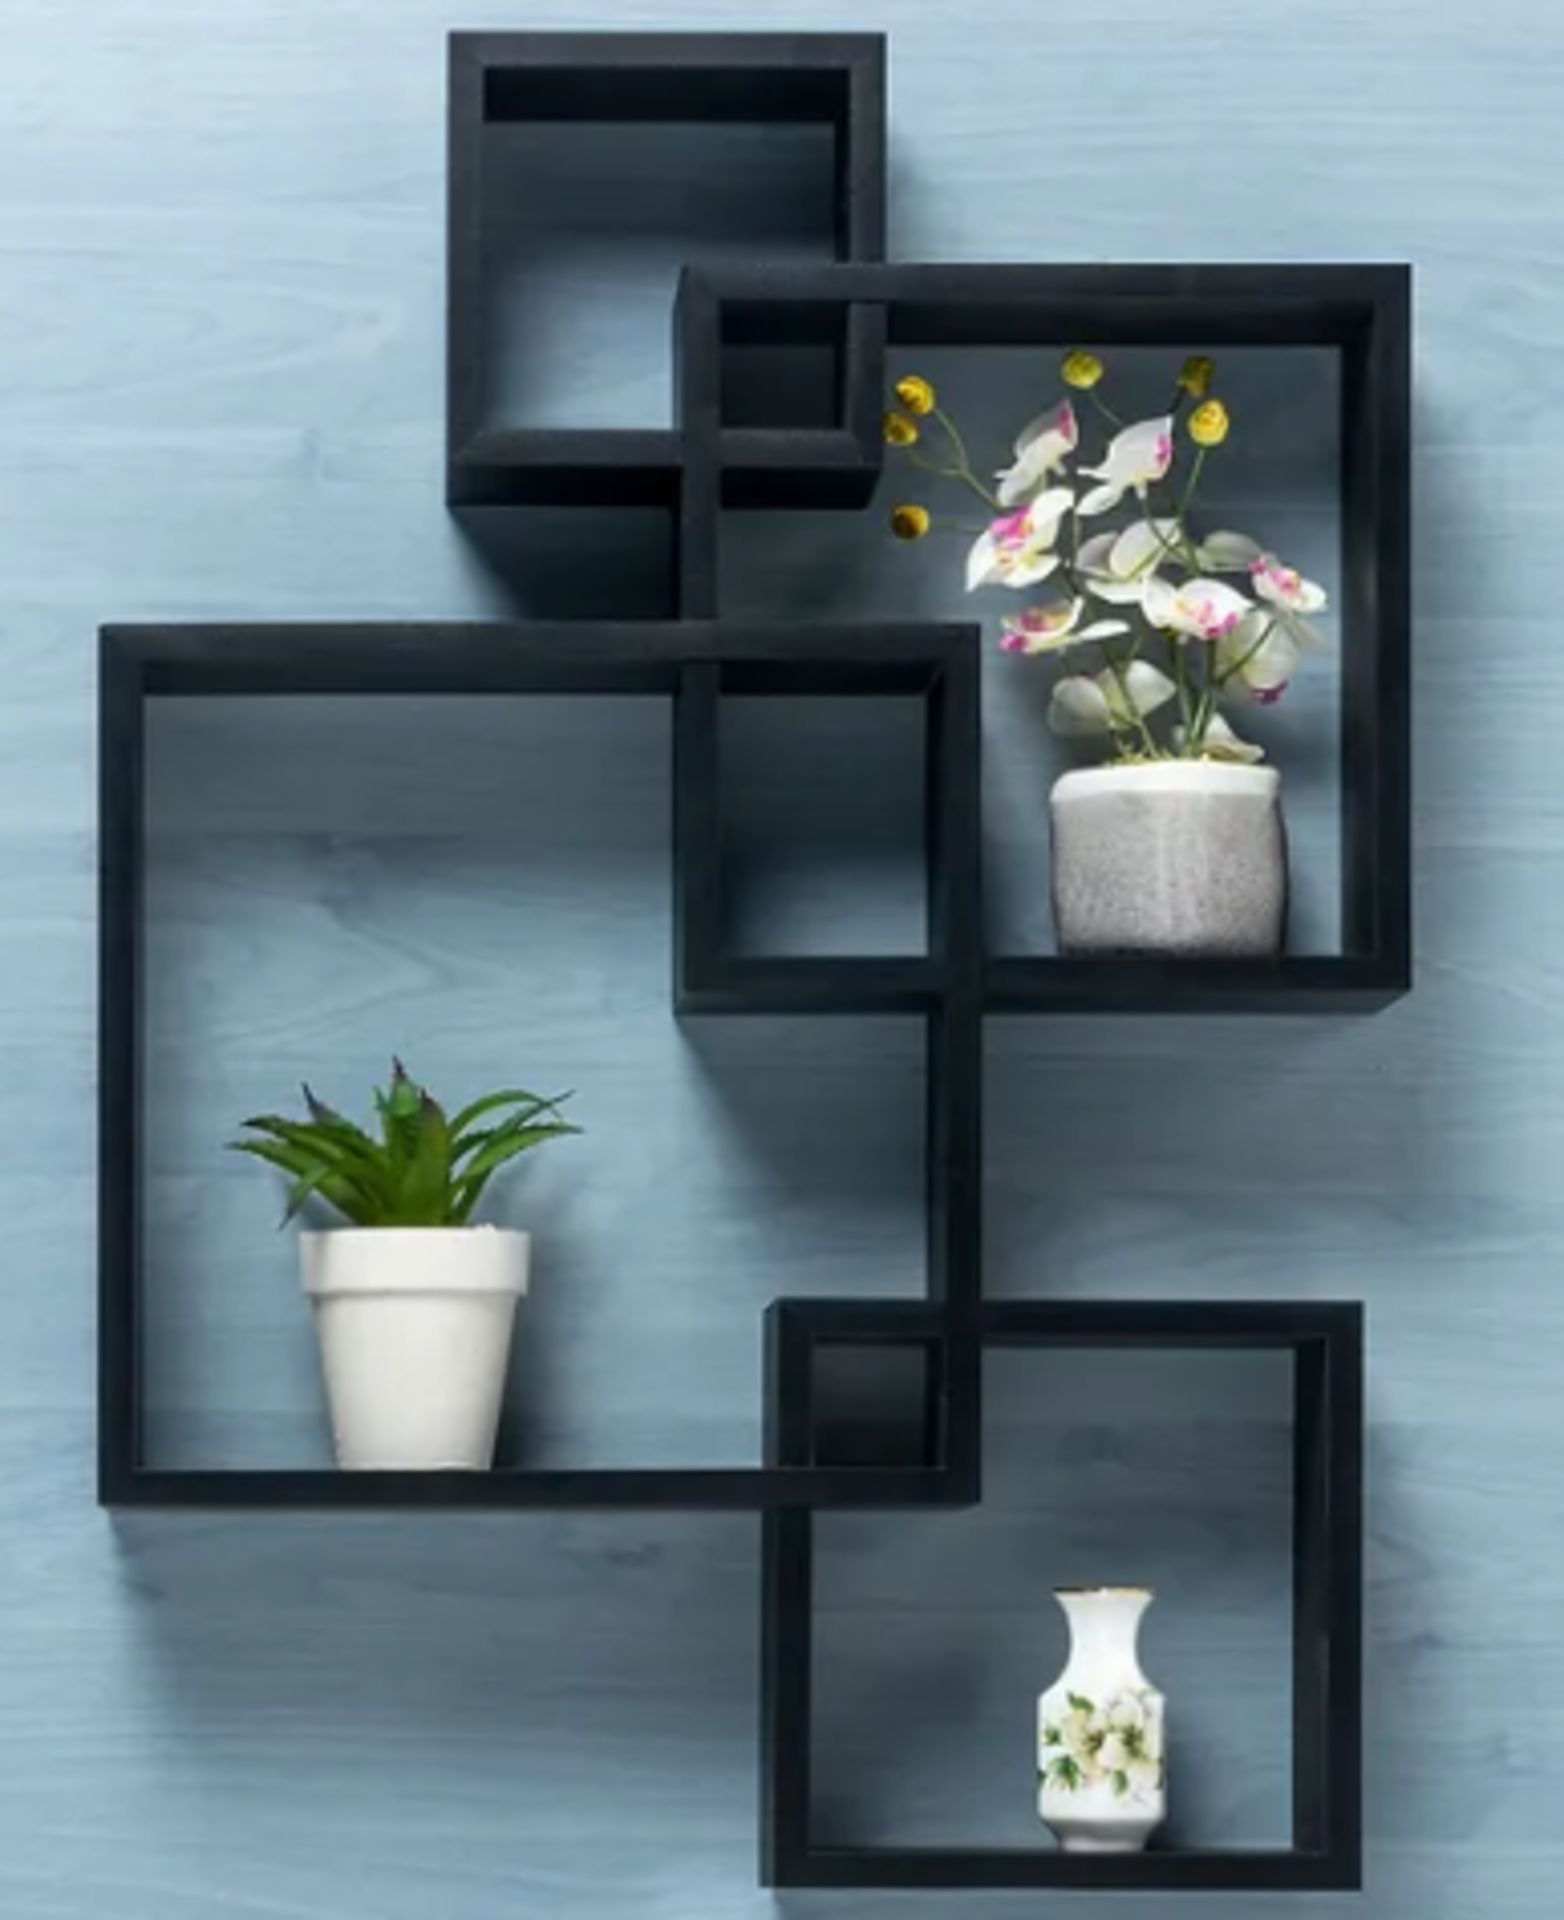 White Gatton Design Wall Mounted Floating Shelves, Interlocking Four Cube Design